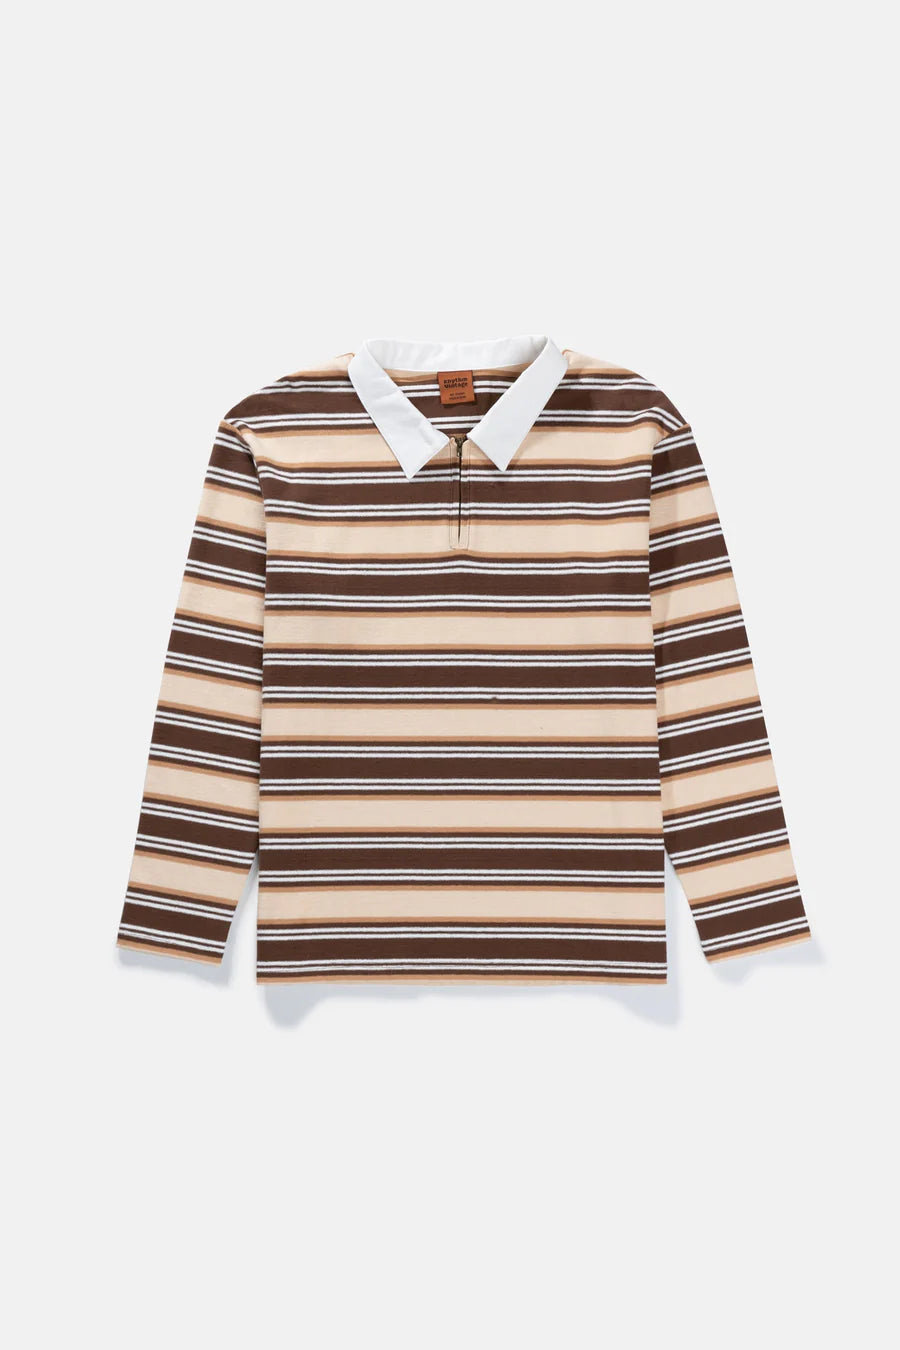 Rhythm Vintage Stripe Polo LS T-Shirt Chocolate